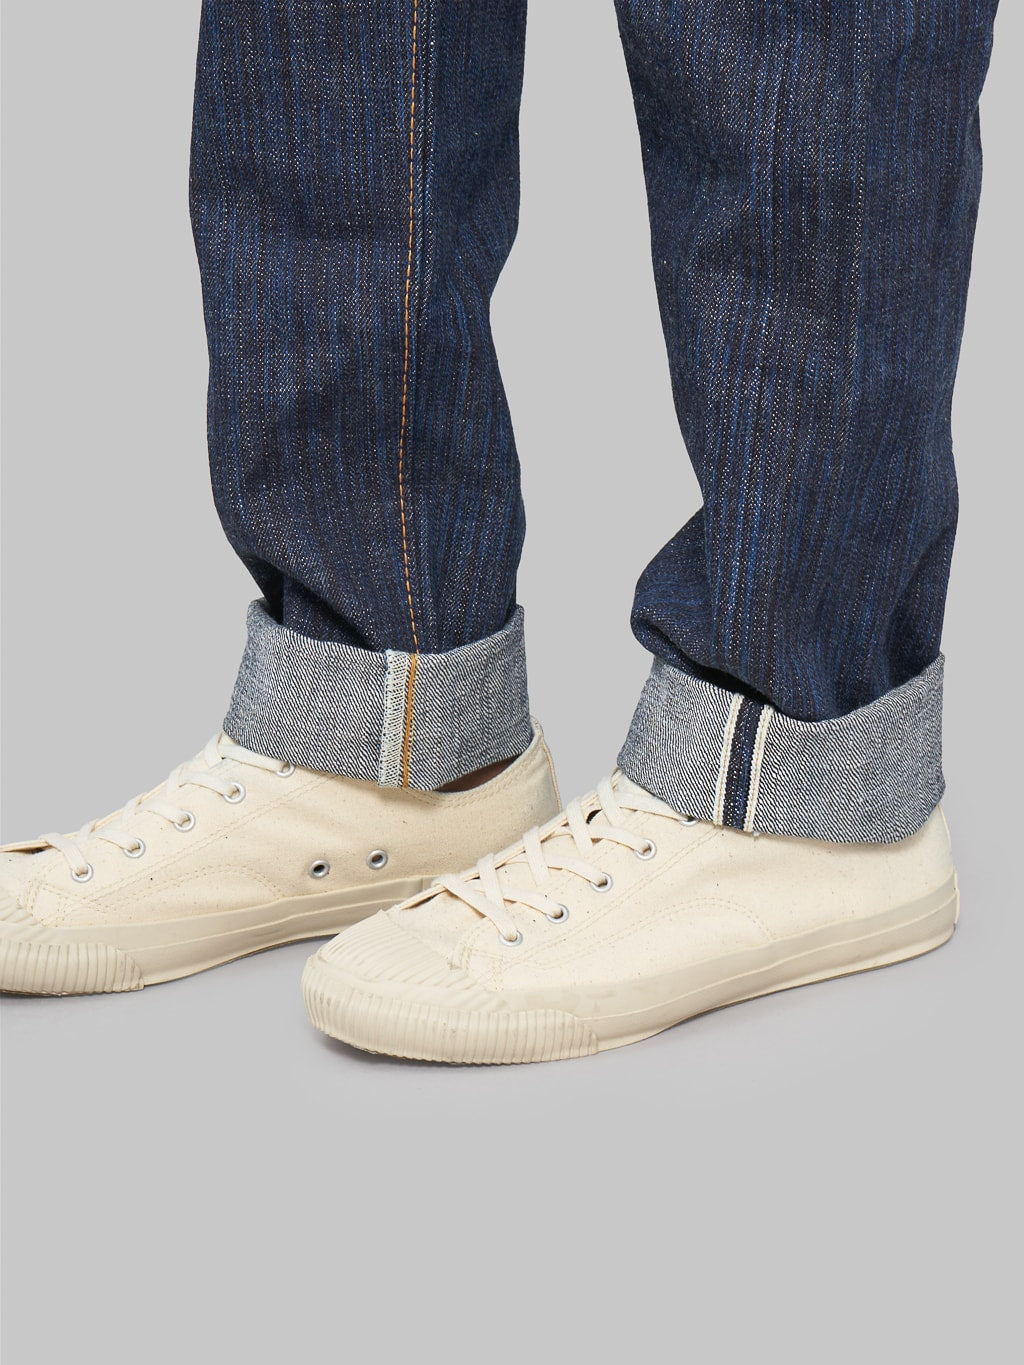 The Strike Gold 8104 Shower Slub straight tapered jeans selvedge